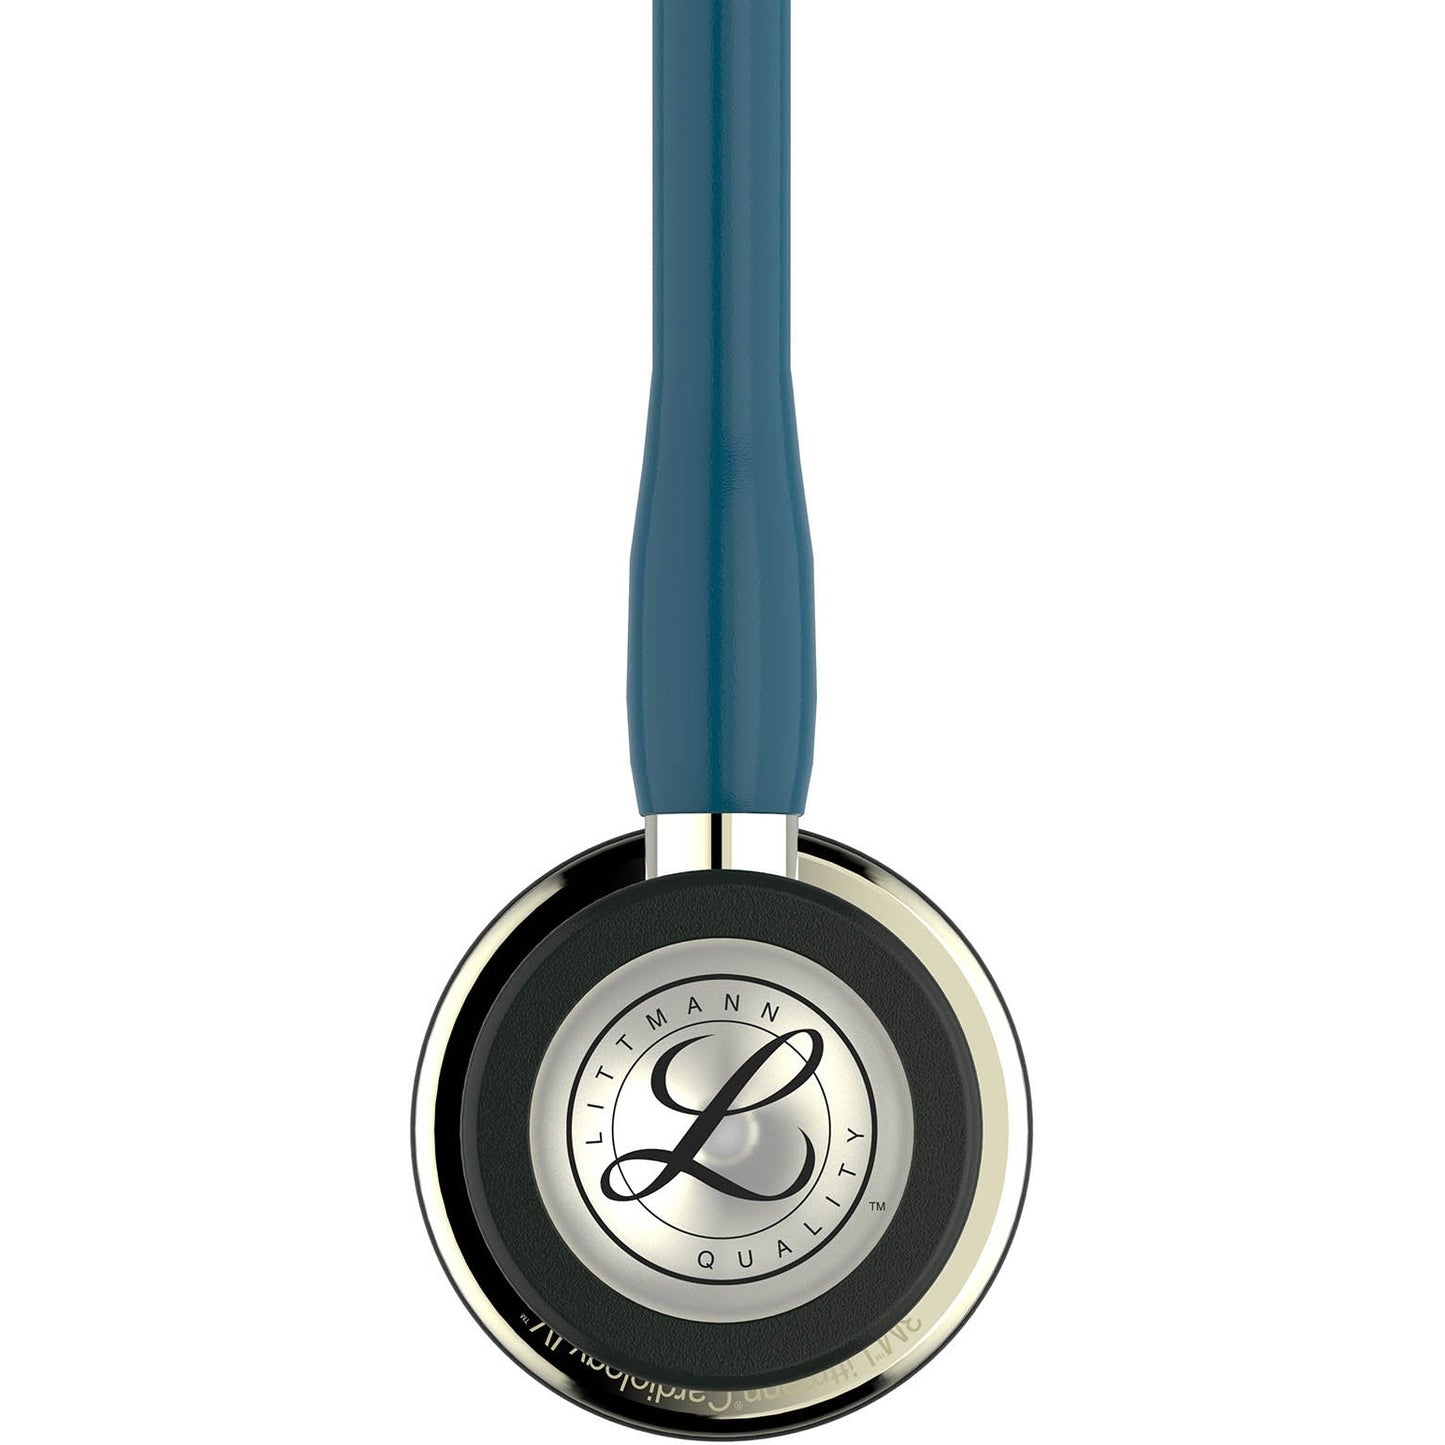 Littmann Cardiology IV Stethoscope: Champagne & Caribbean Blue 6190 3M Littmann